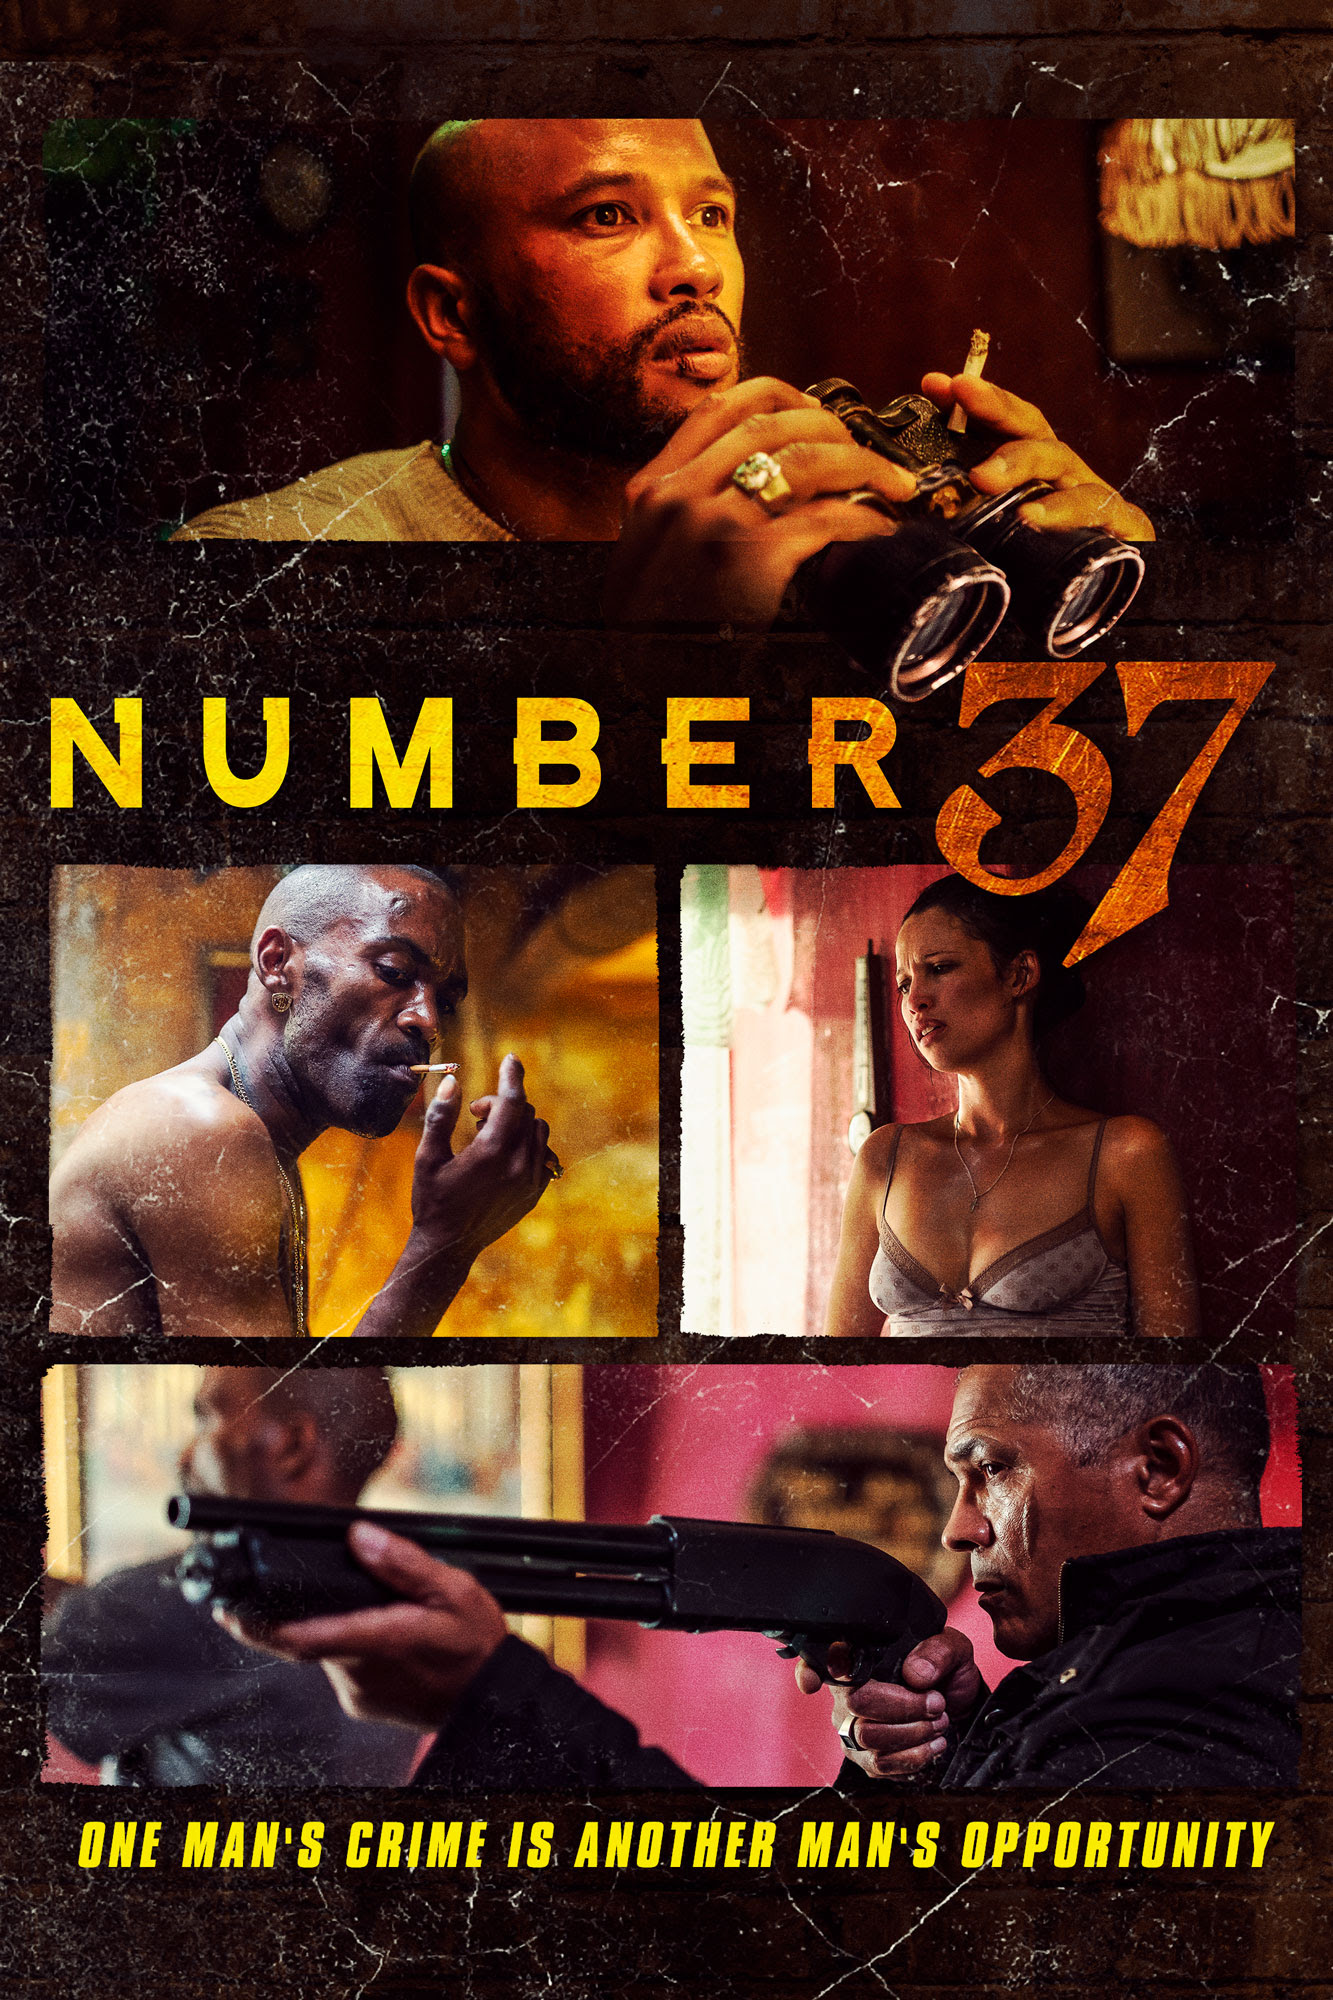 Number 37